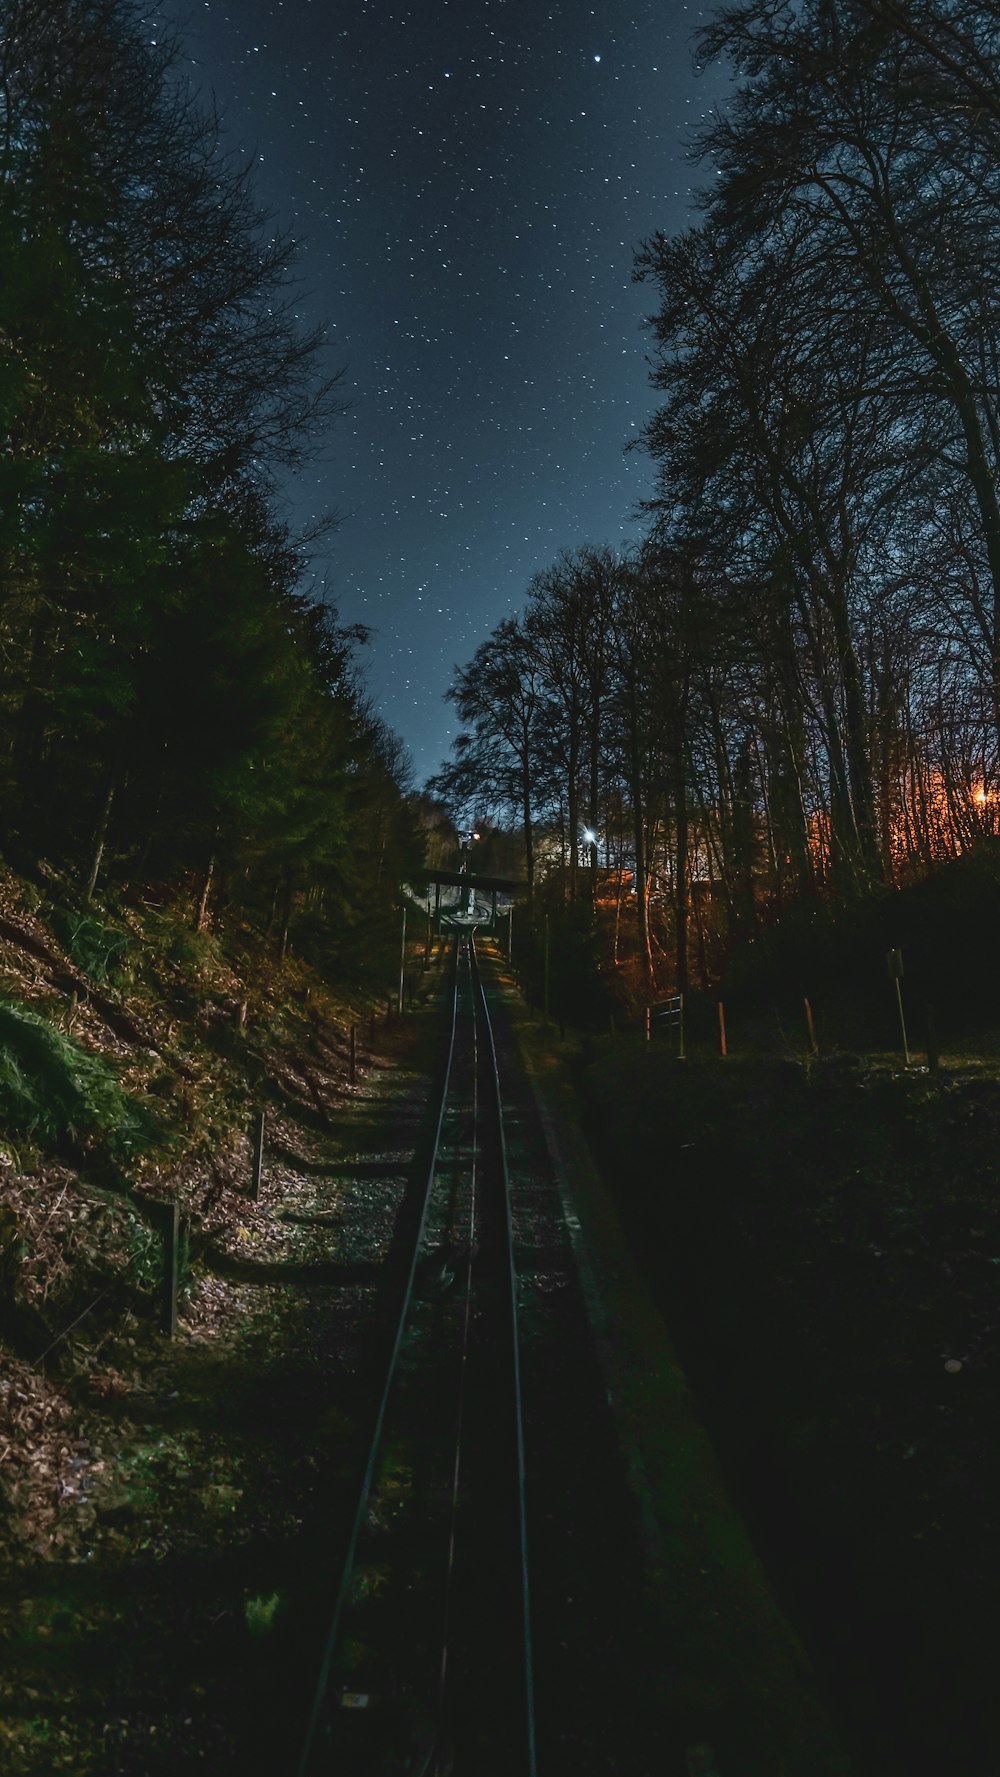 Un binario del treno sotto un cielo notturno con le stelle